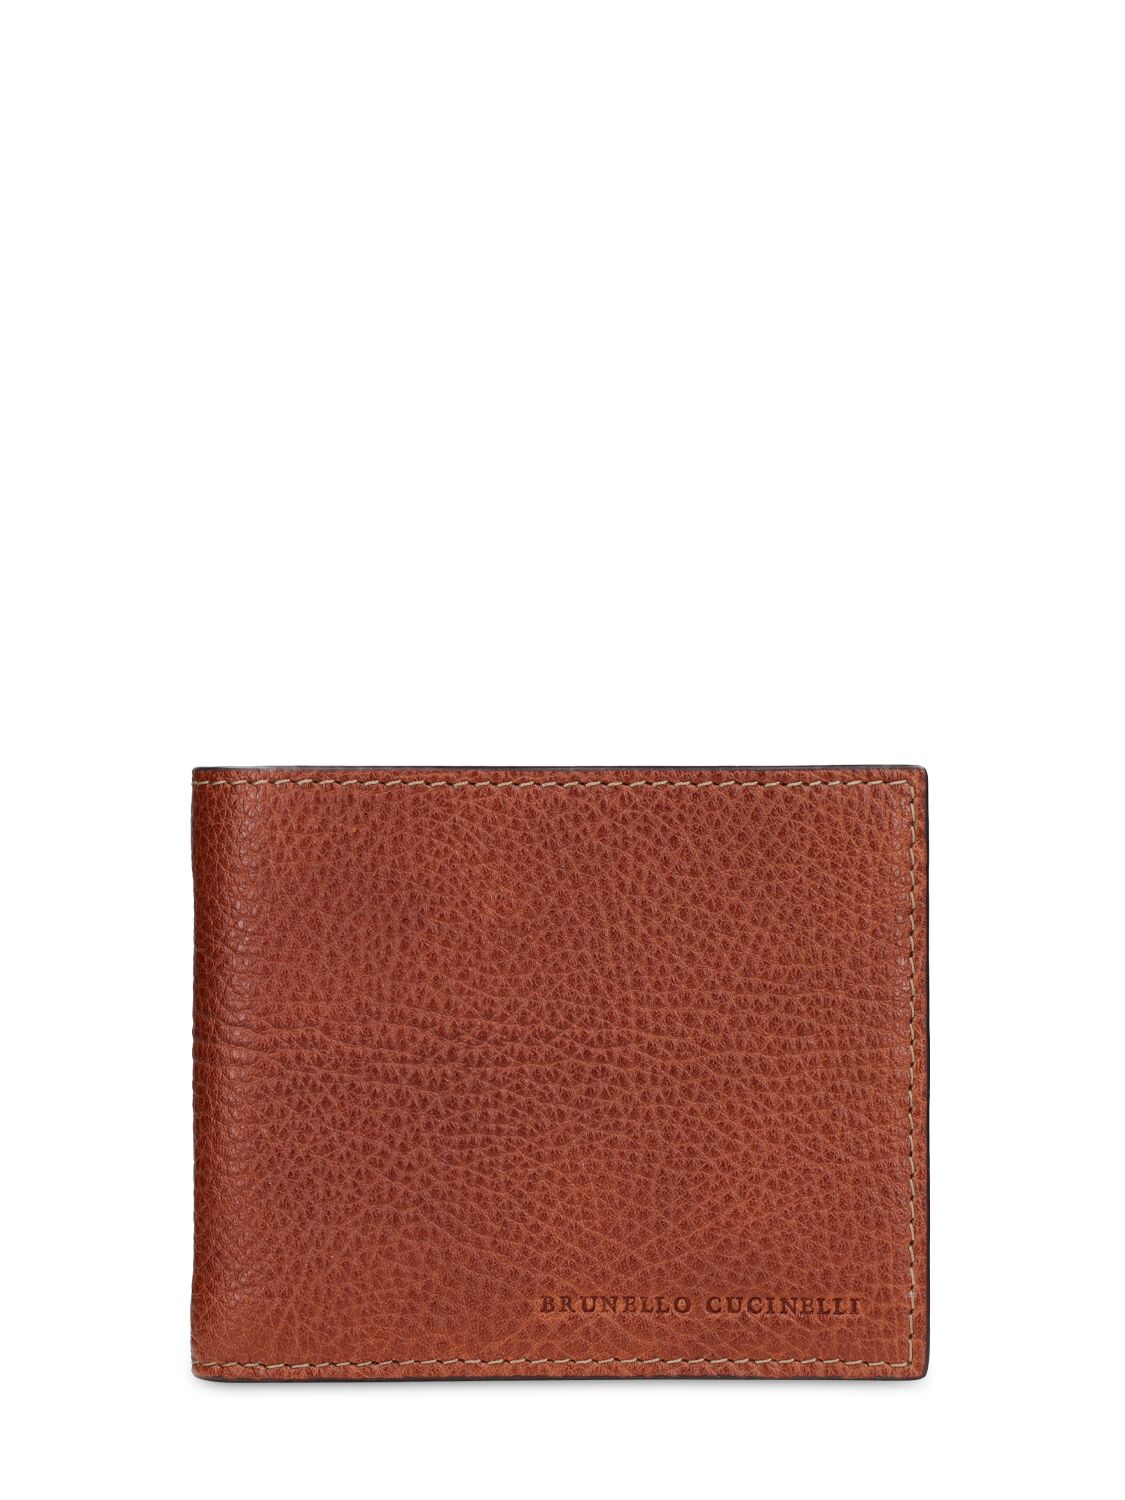 Brunello Cucinelli Leather Logo Wallet In Copper